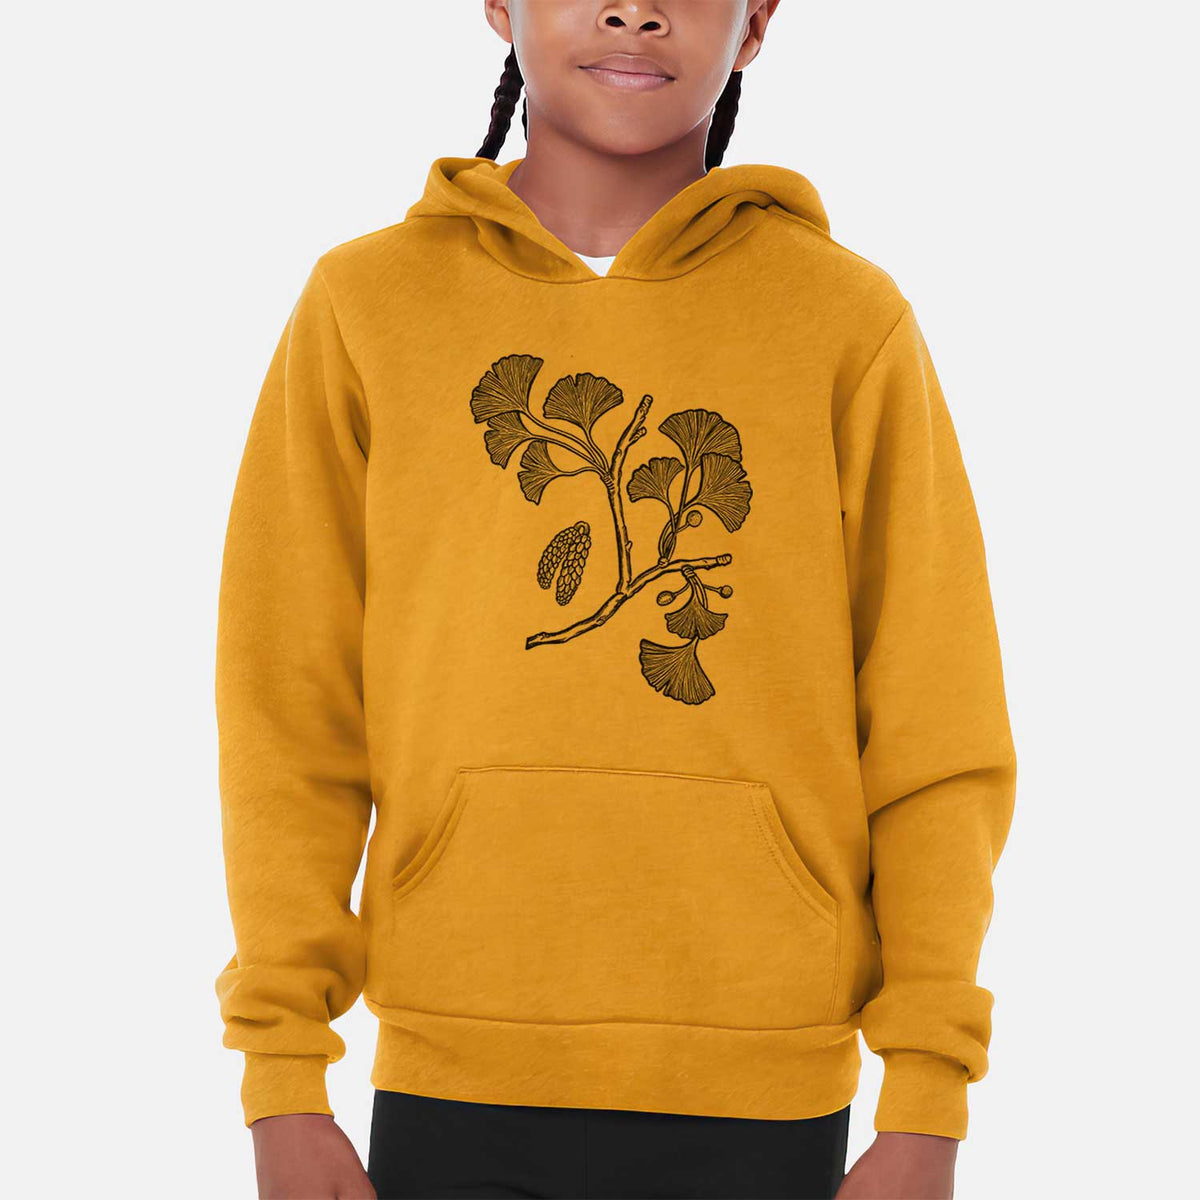 Ginkgo Biloba - Ginkgo Tree Stem with Leaves - Youth Hoodie Sweatshirt